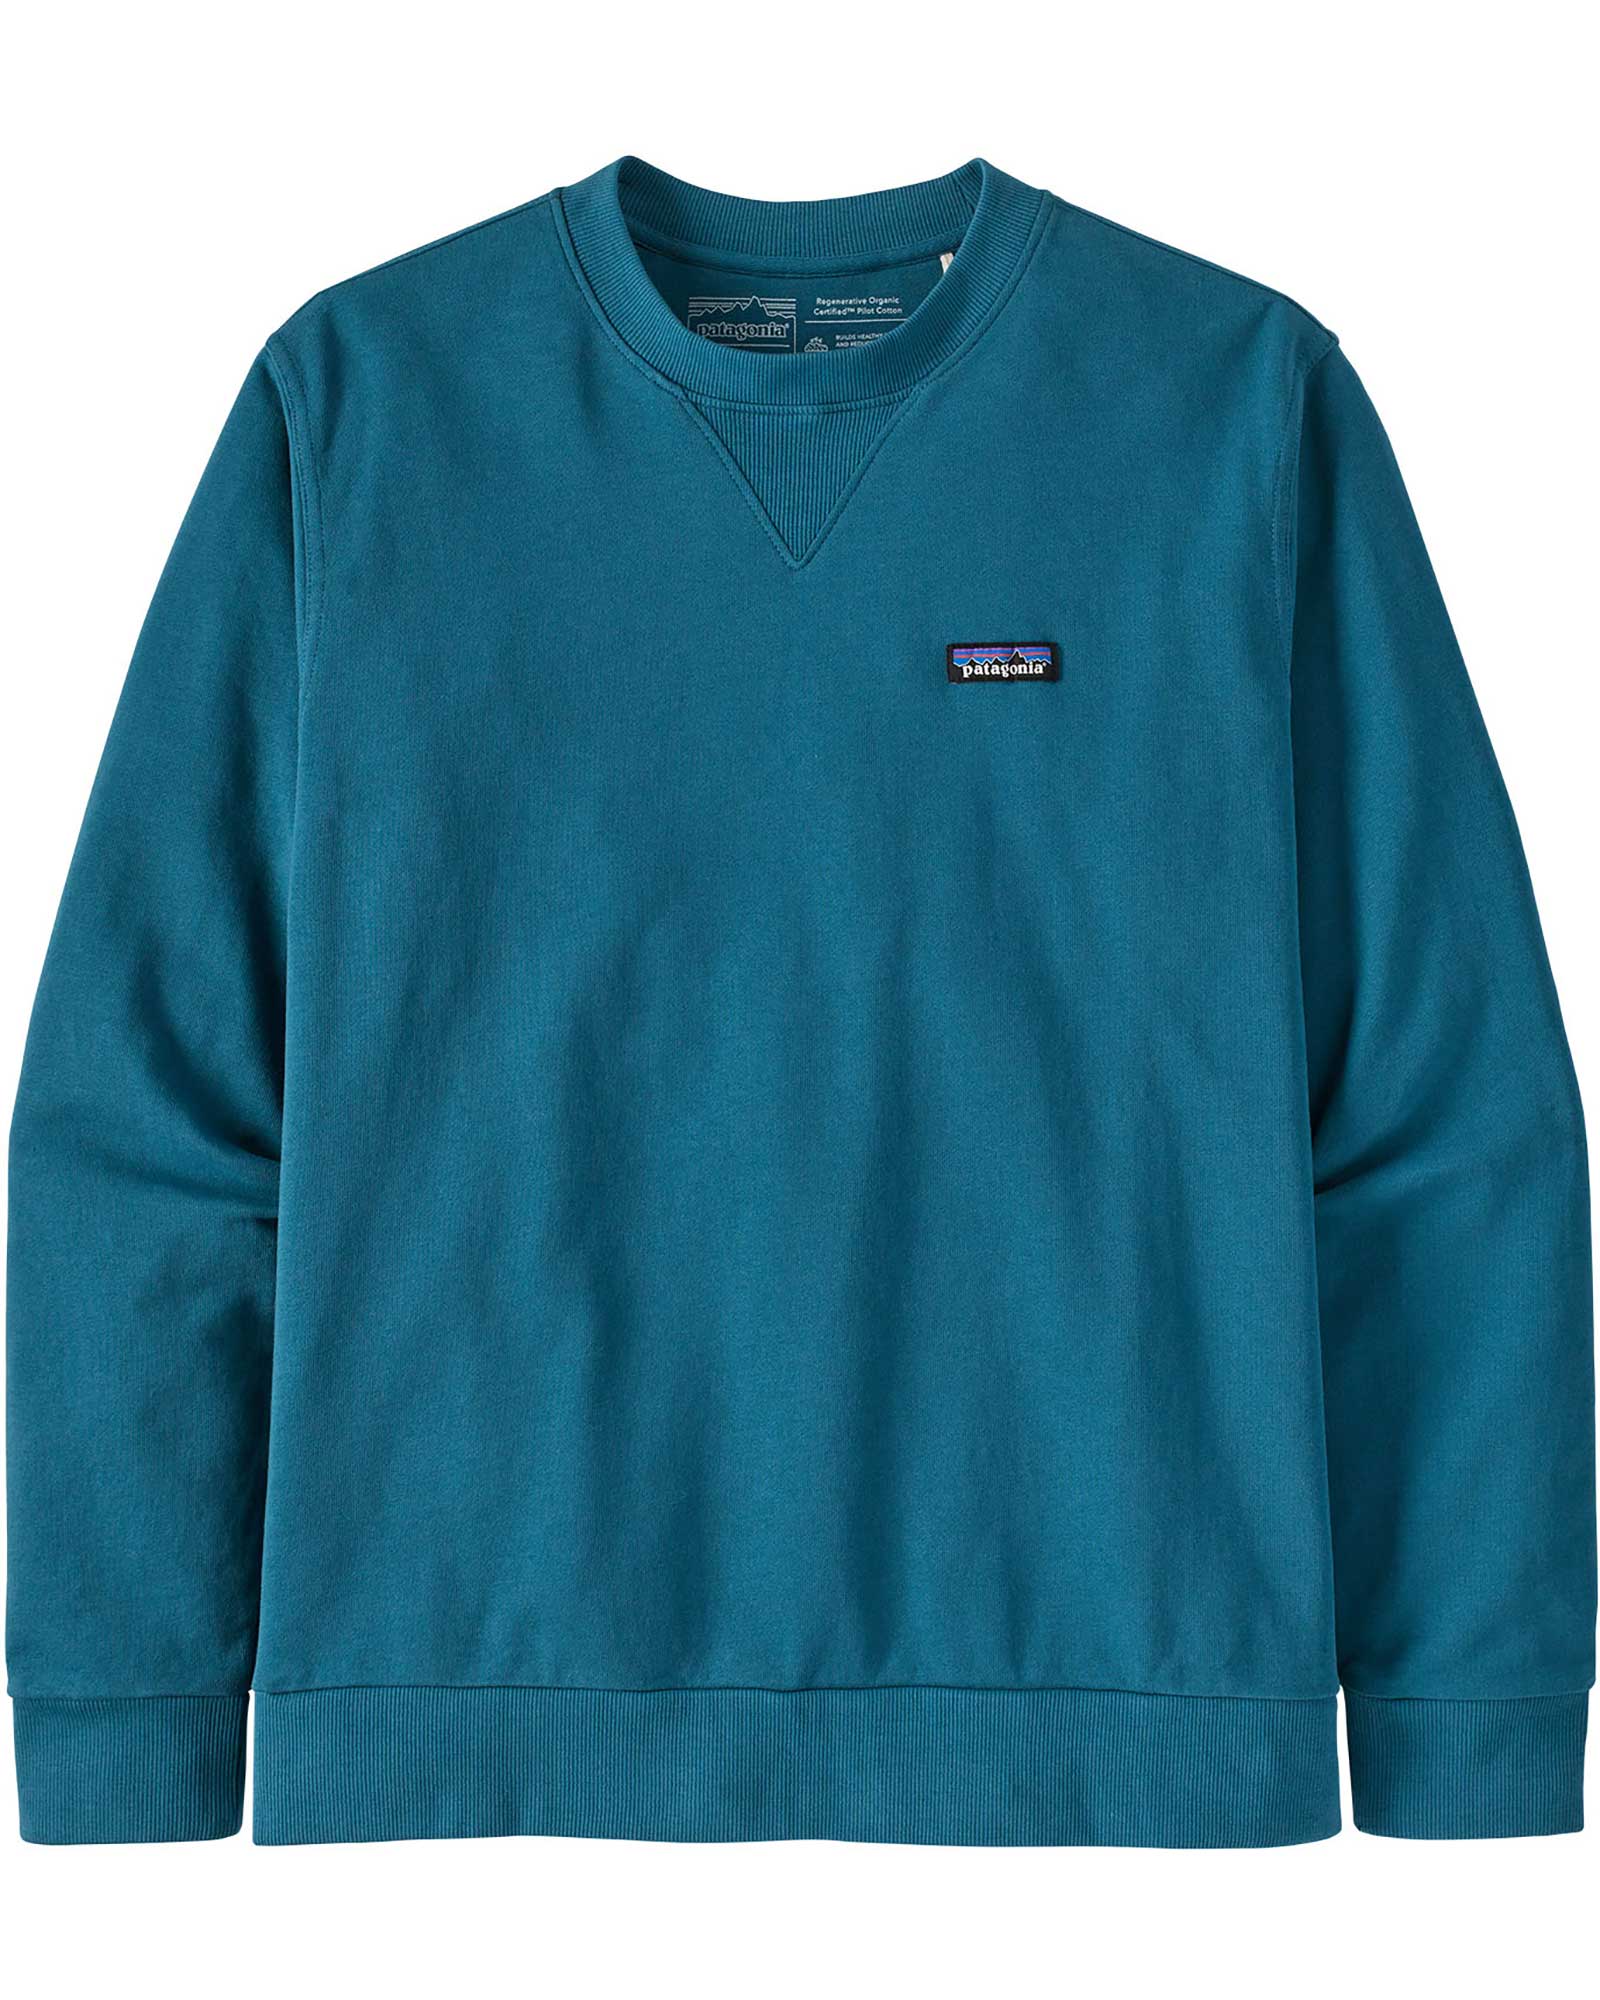 Patagonia Regen Cotton Men’s Crewneck Sweatshirt - Wavy Blue S